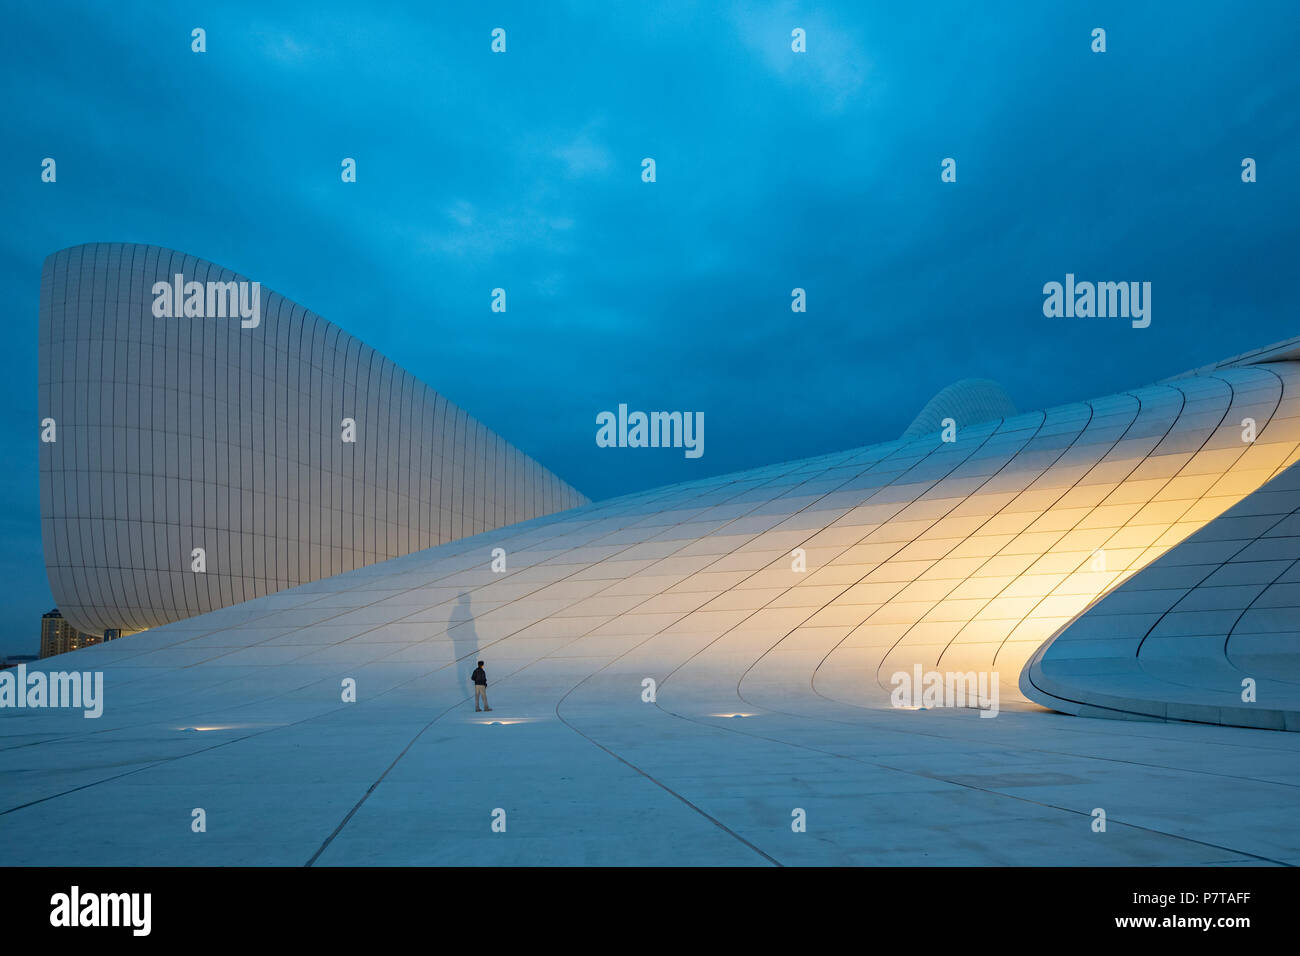 The Heydar Aliyev Center at night in Baku,Azerbaijan Stock Photo